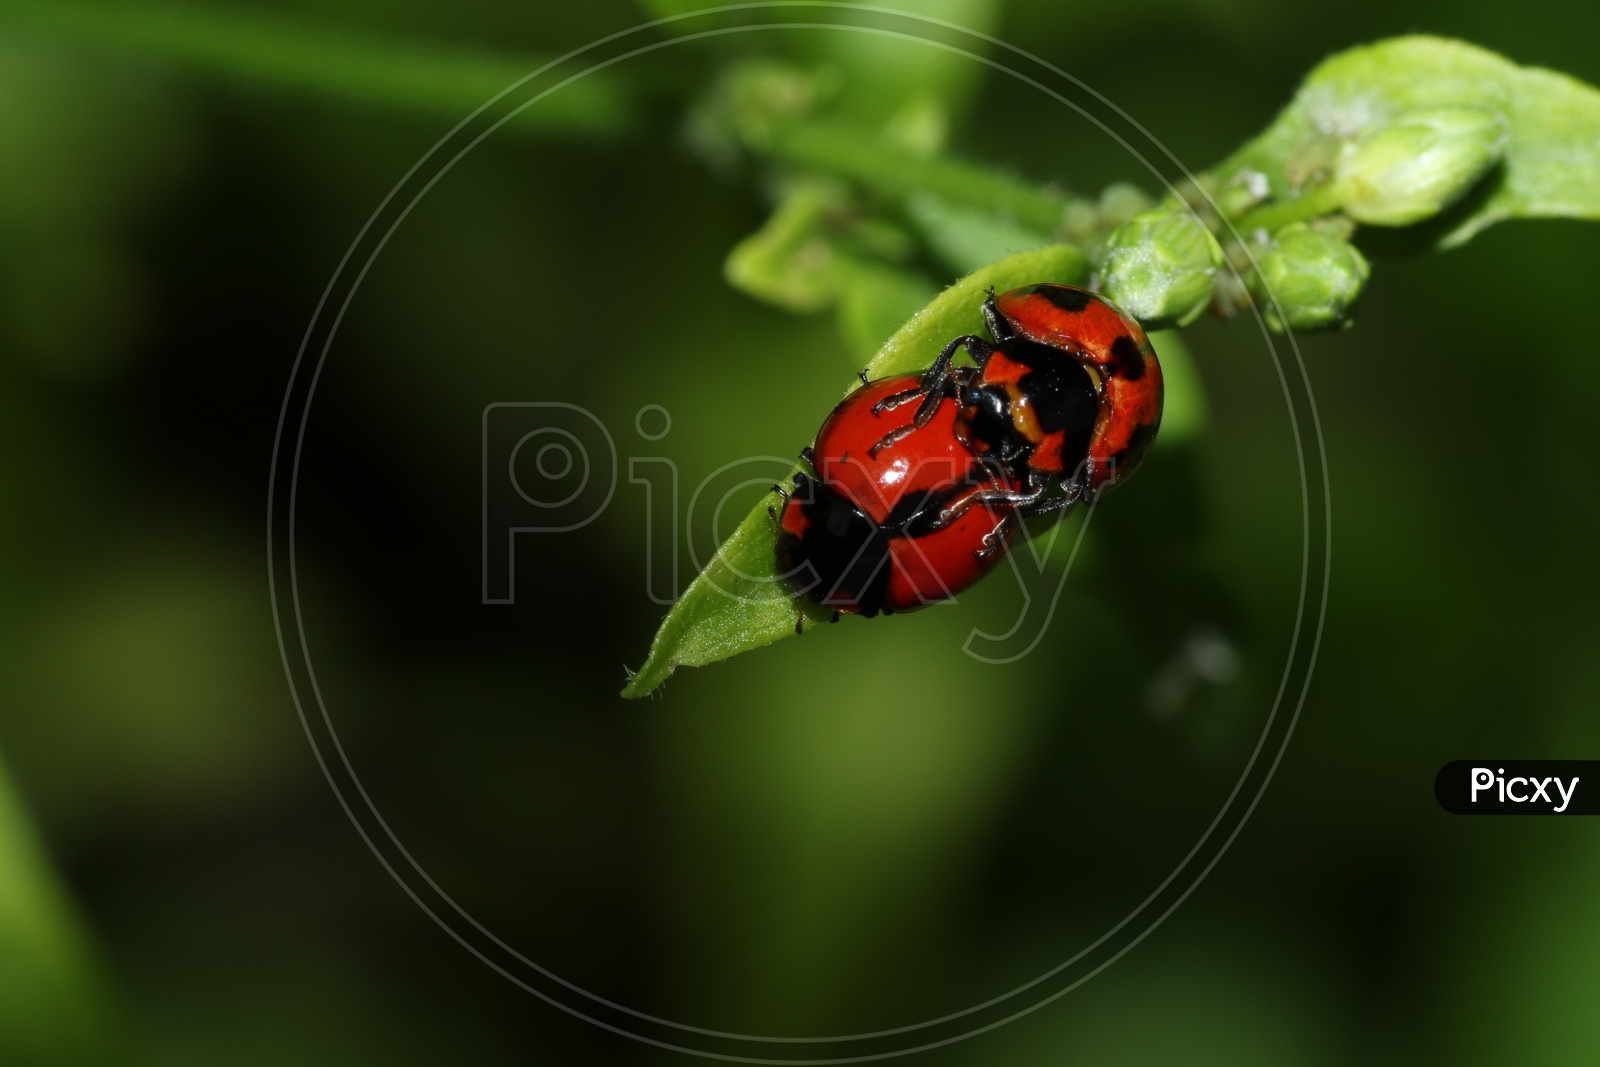 Close-up of ladybug on a leaf